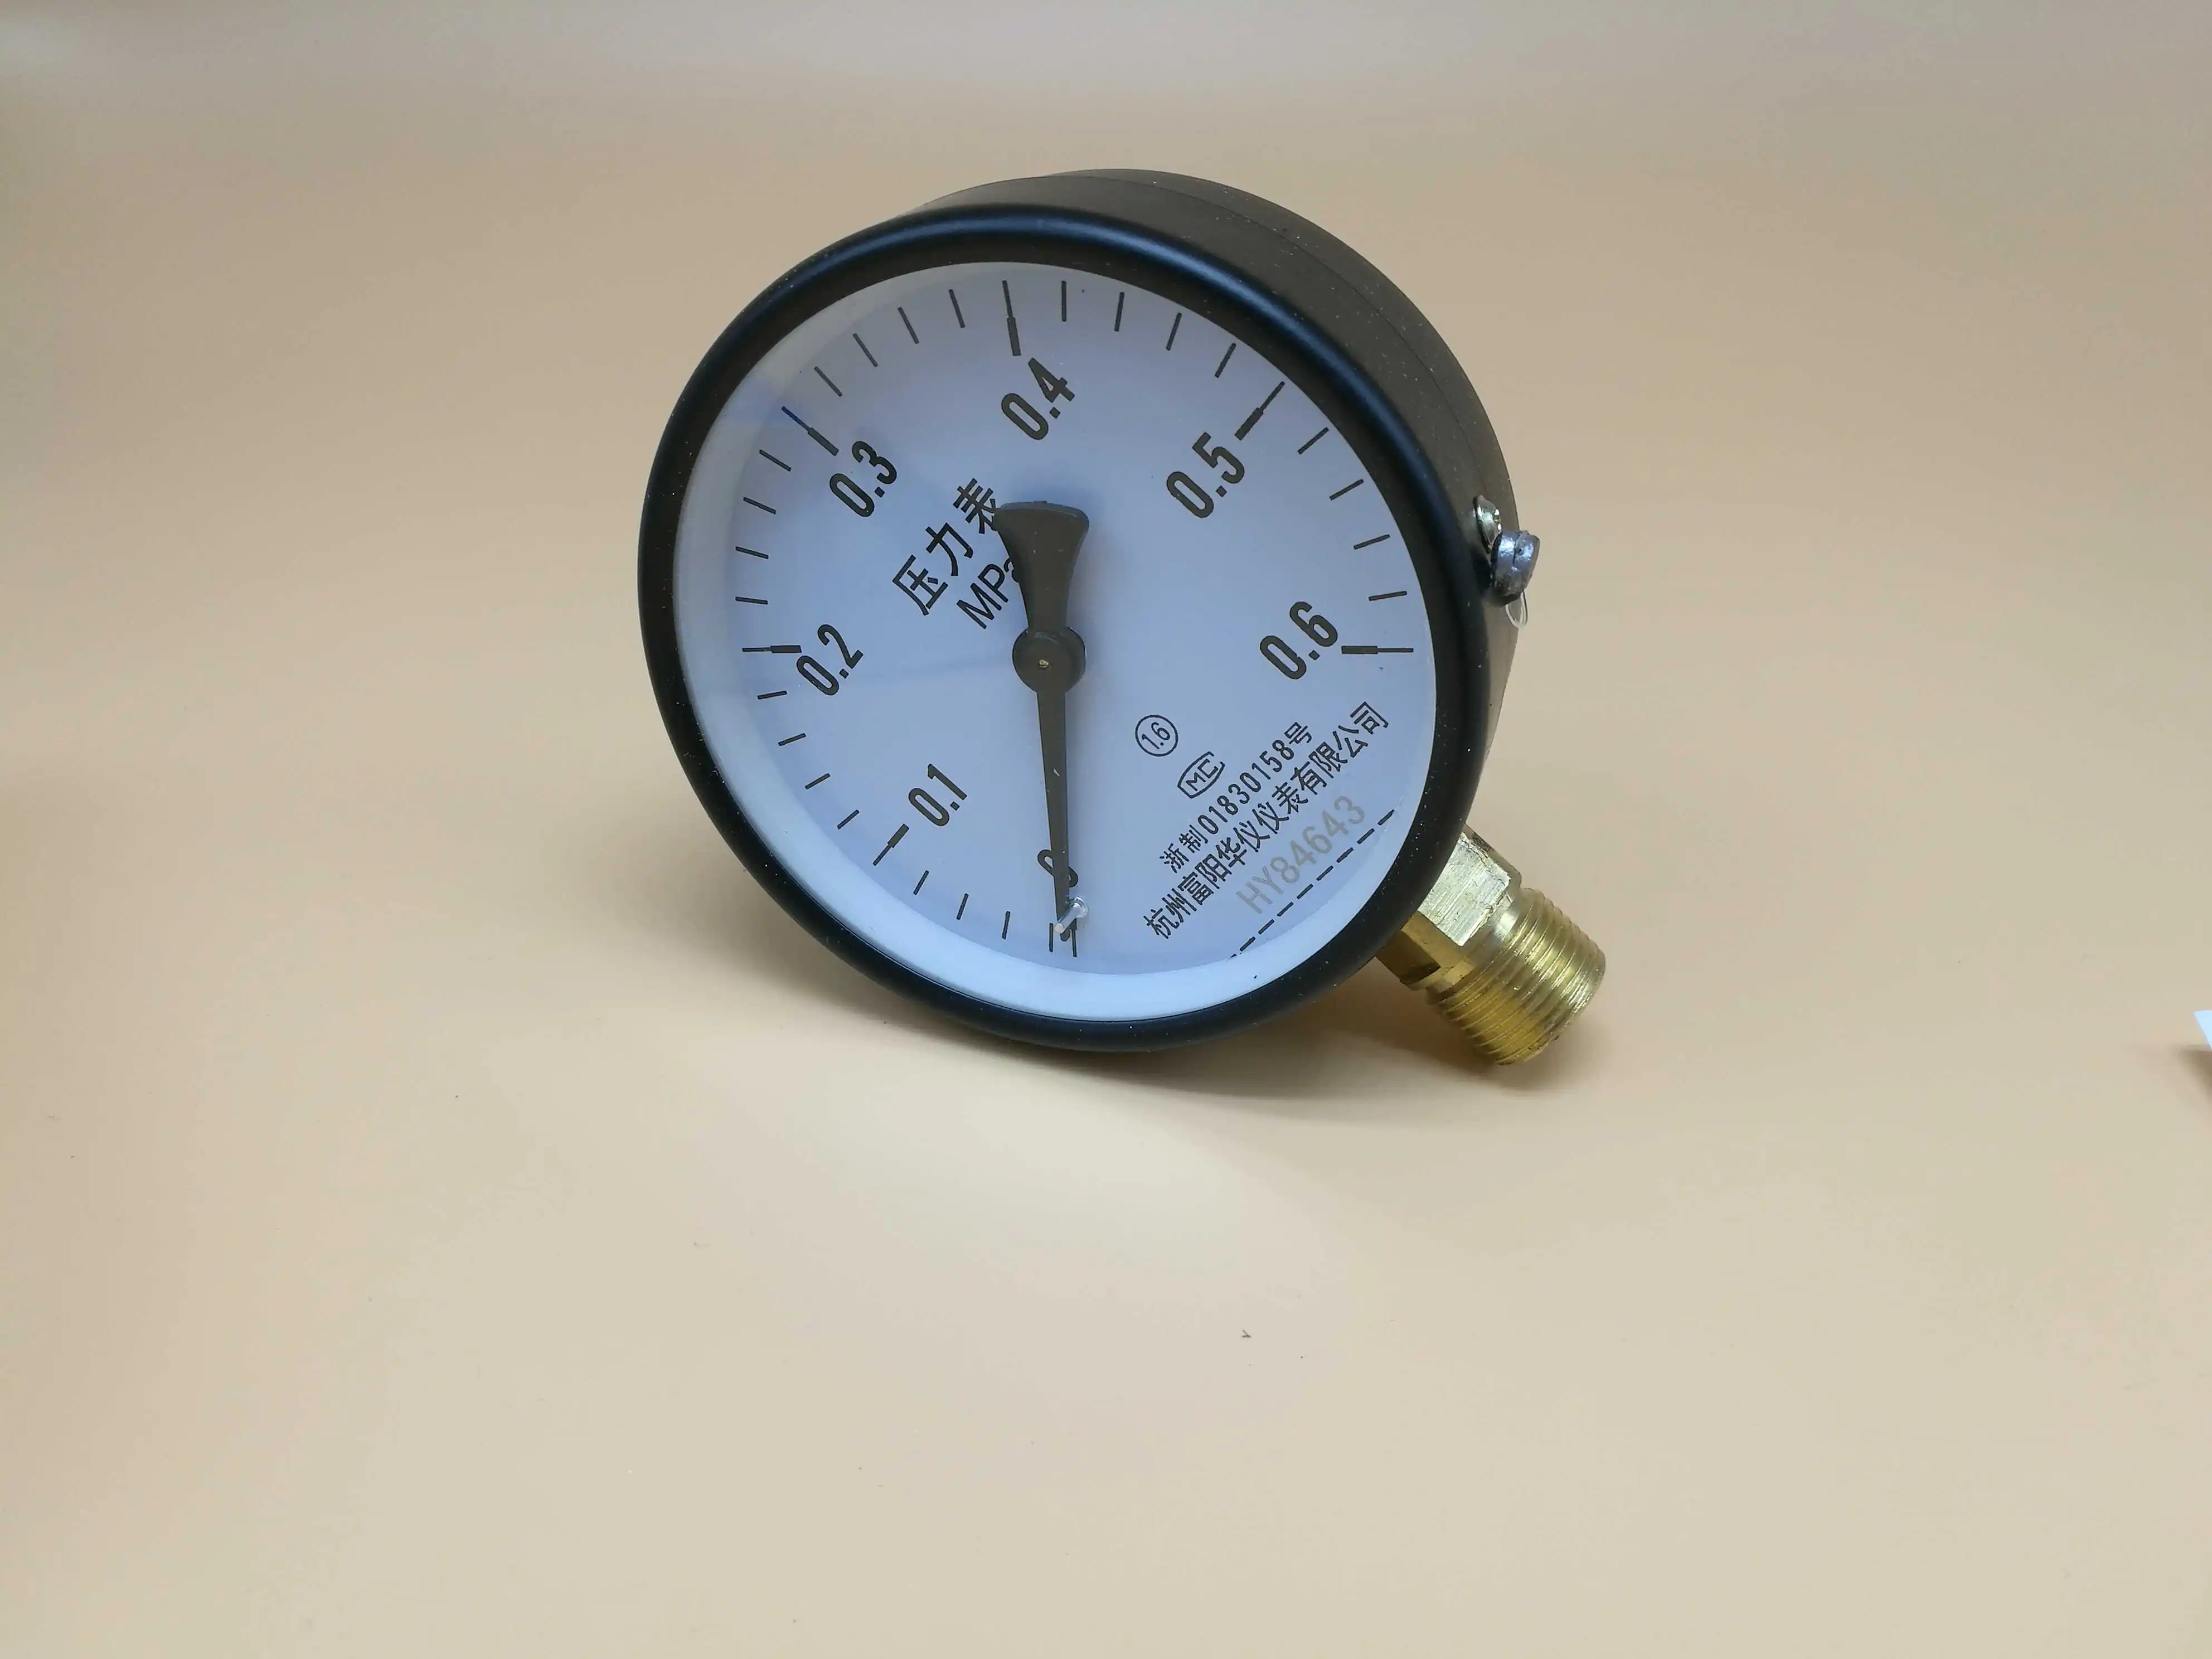 Measuring steam pressure фото 10